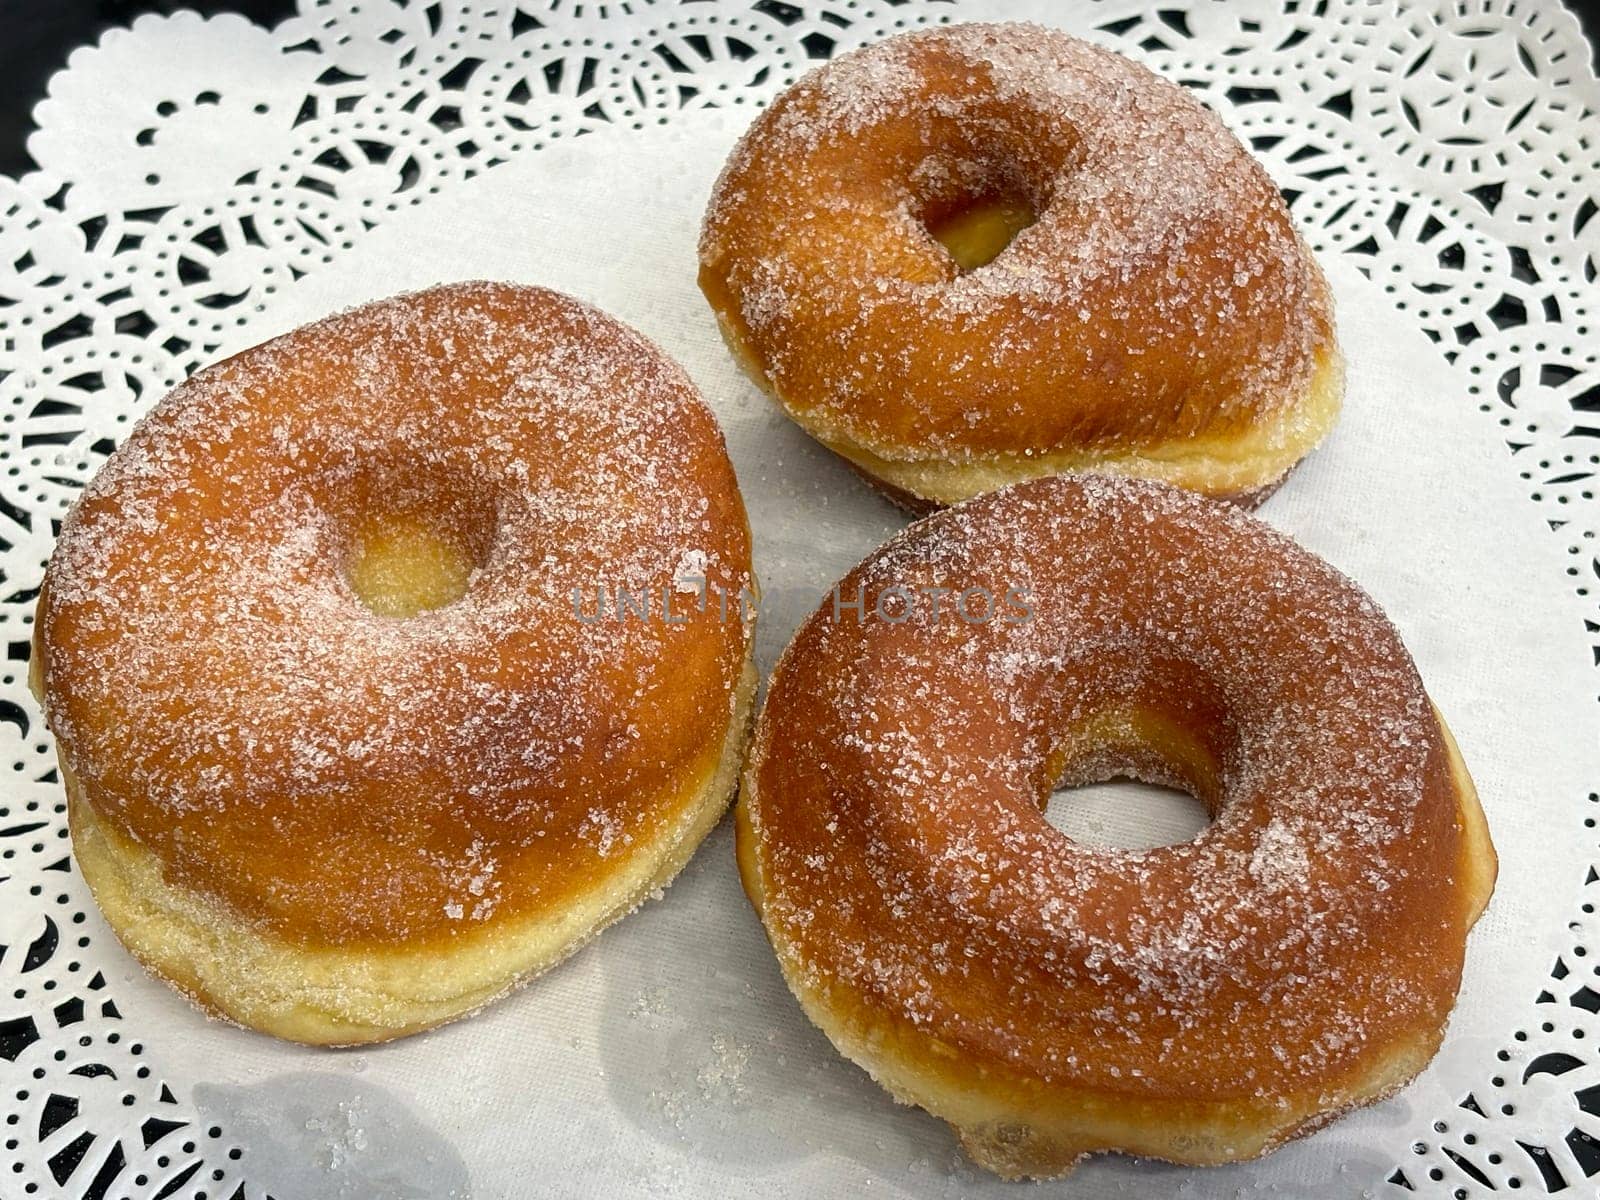 zeppola or sweet doughnut by salmas